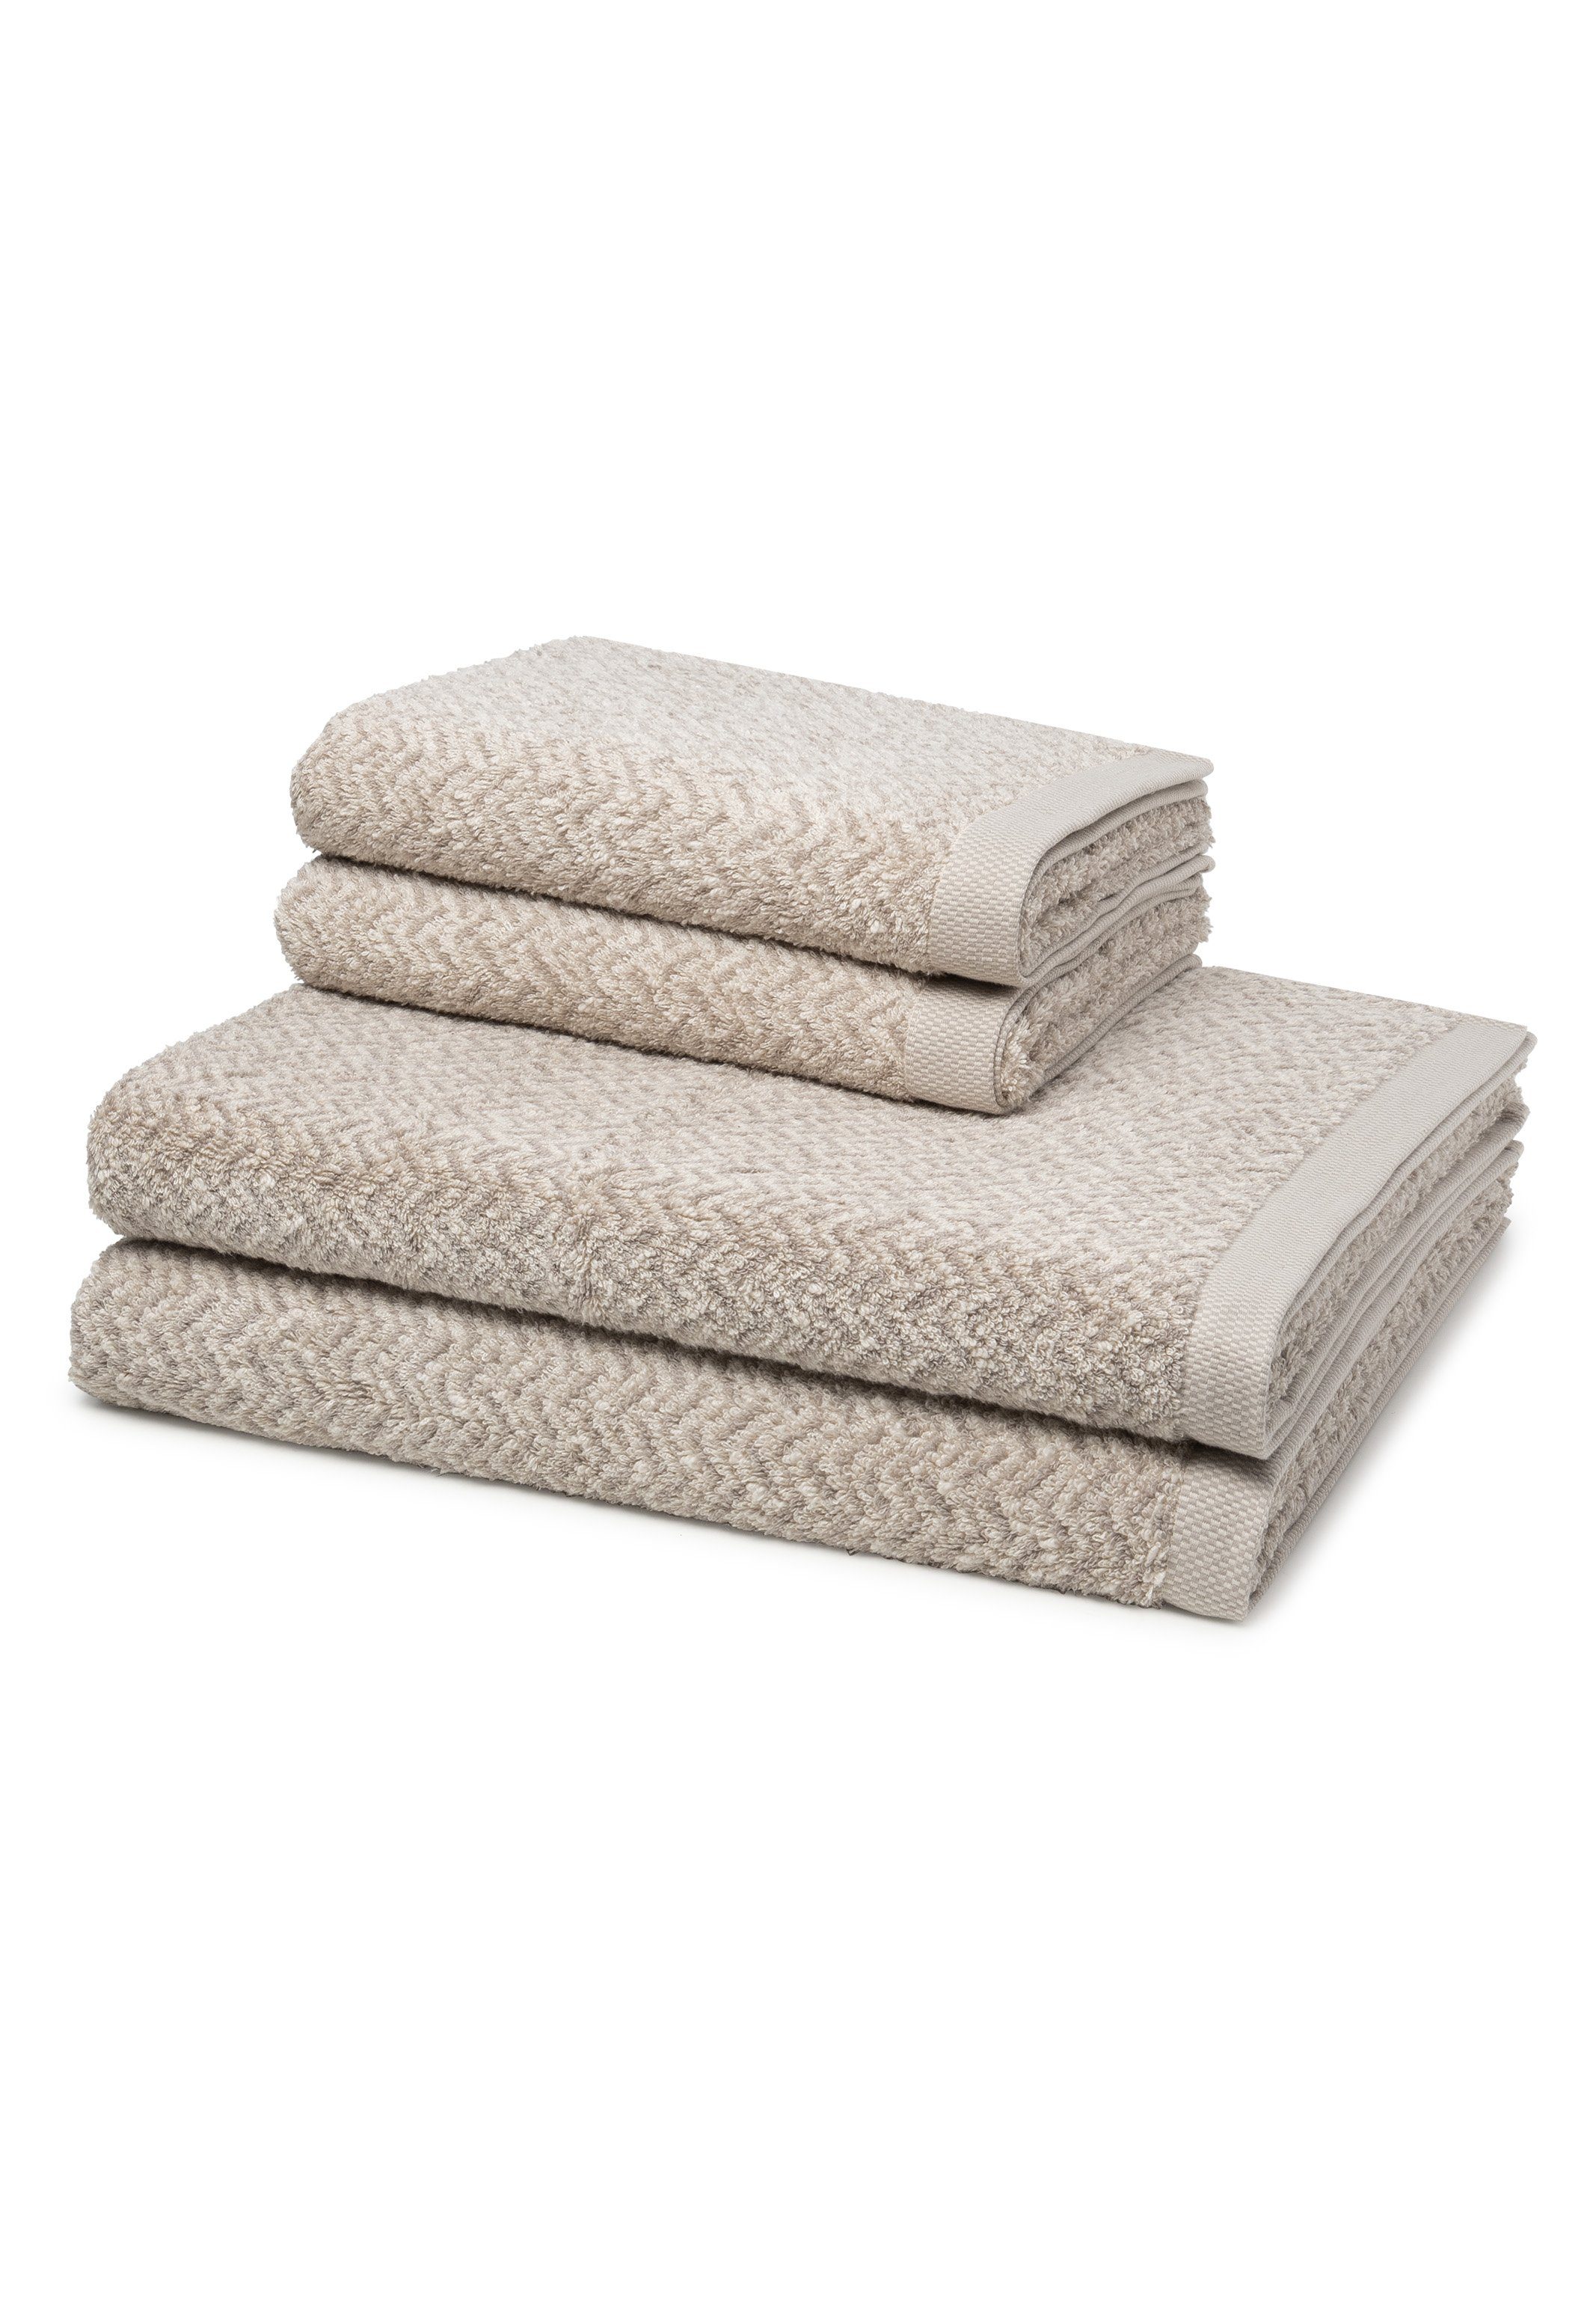 Möve Handtuch Set (Spar-Set, - Baumwolle, 2 - im Weicher 4-tlg), 2 X Set Brooklyn Handtuch Baumwolle Fischgrat, Duschtuch Materialmix - X